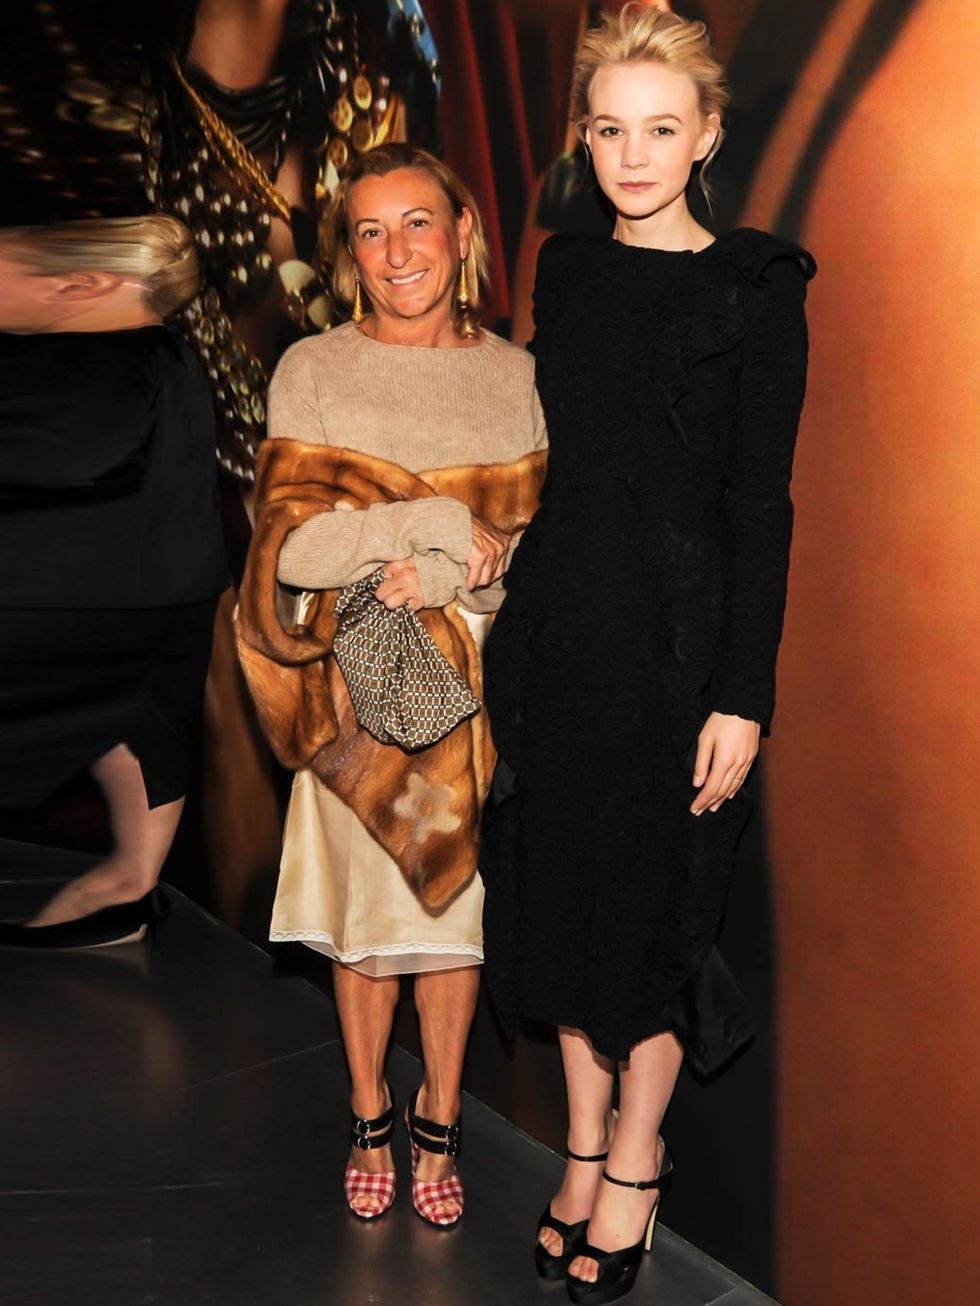 <p><a href="http://www.elleuk.com/star-style/celebrity-style-files/carey-mulligan">Carey Mulligan</a> in a black Prada dress, with Miuccia Prada.</p>